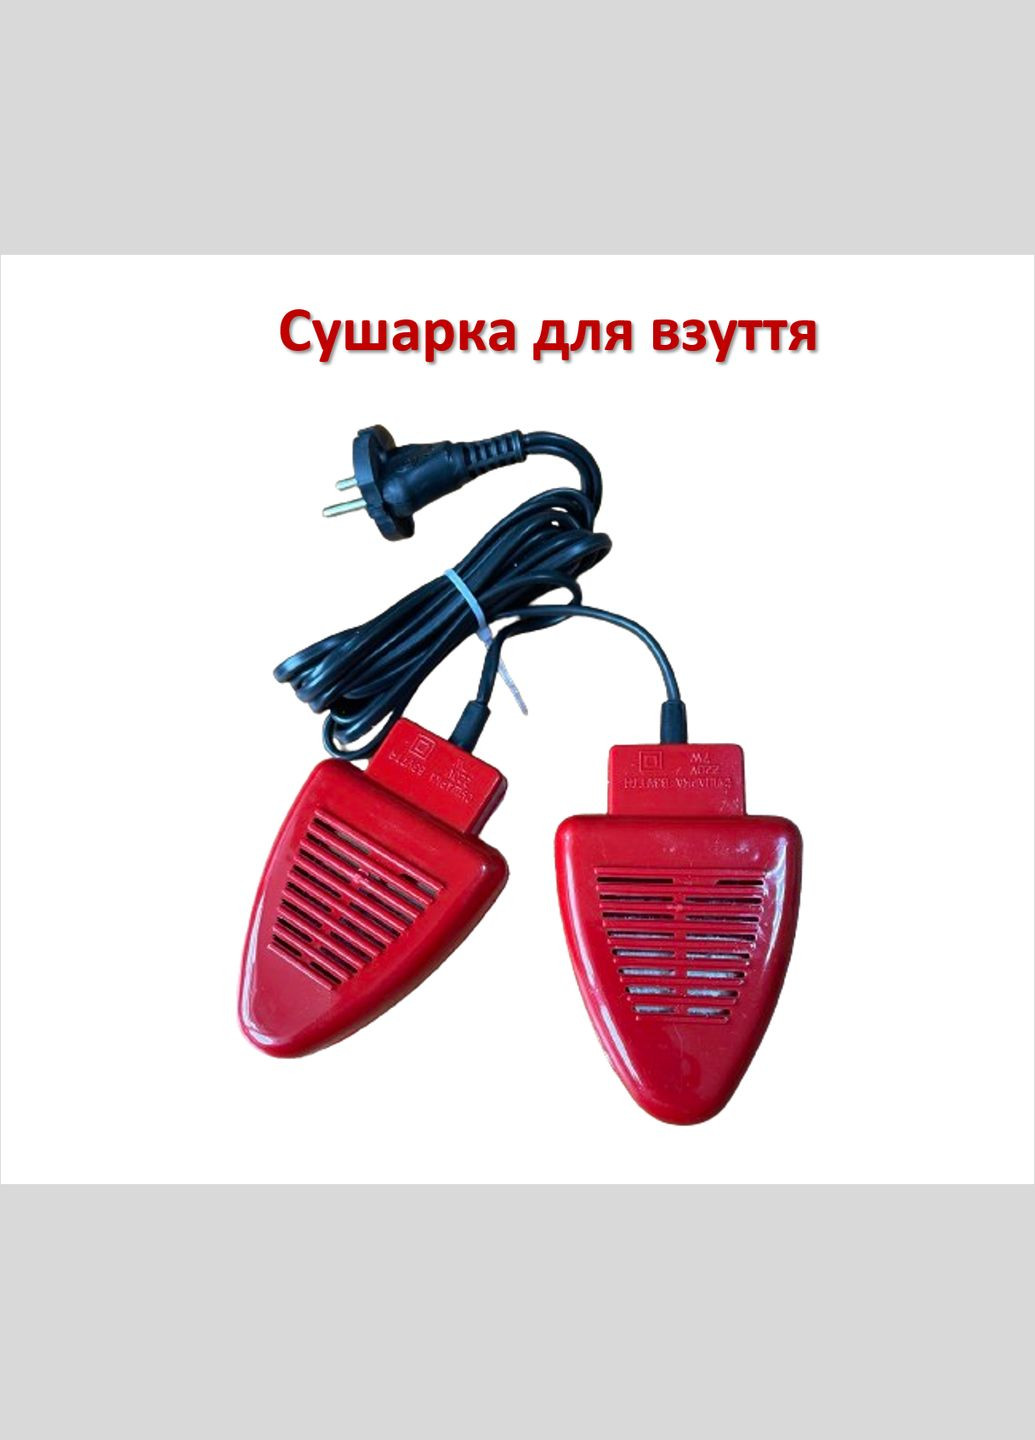 Сушарка для взуття електрична універсальна Monocrystal (280947127)